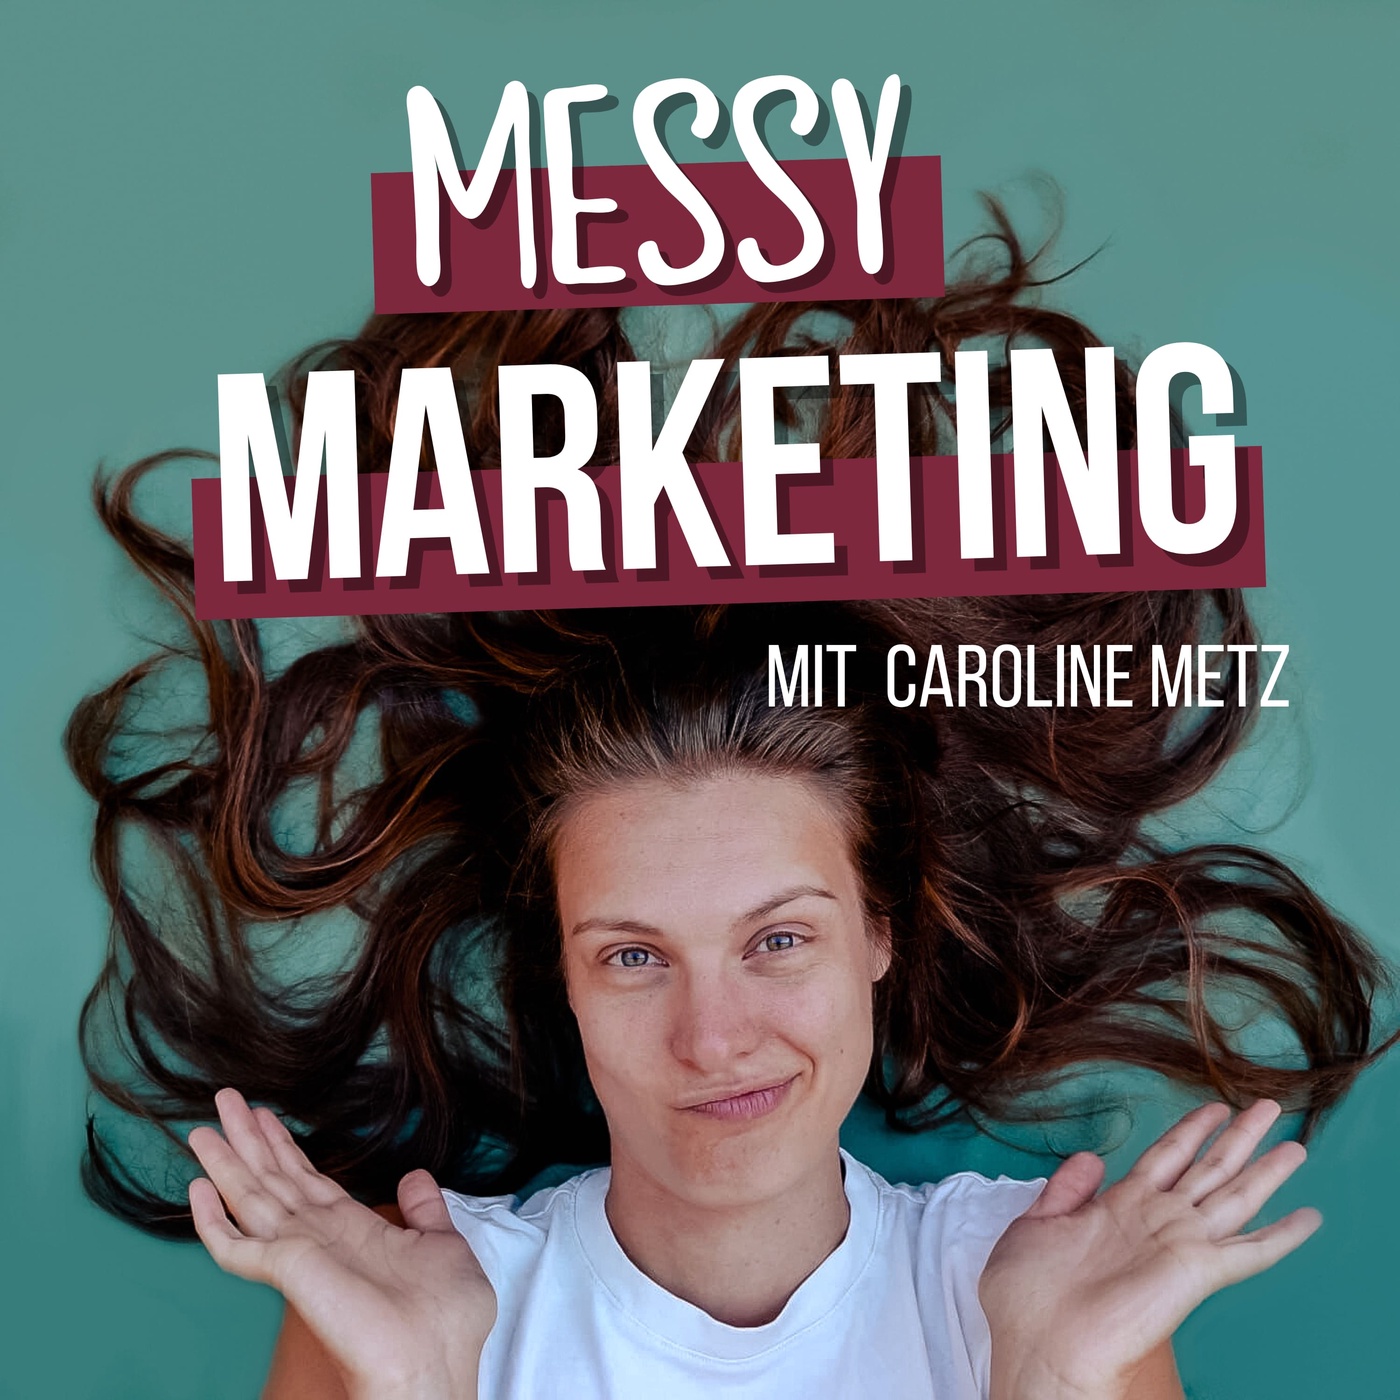 Messy Marketing